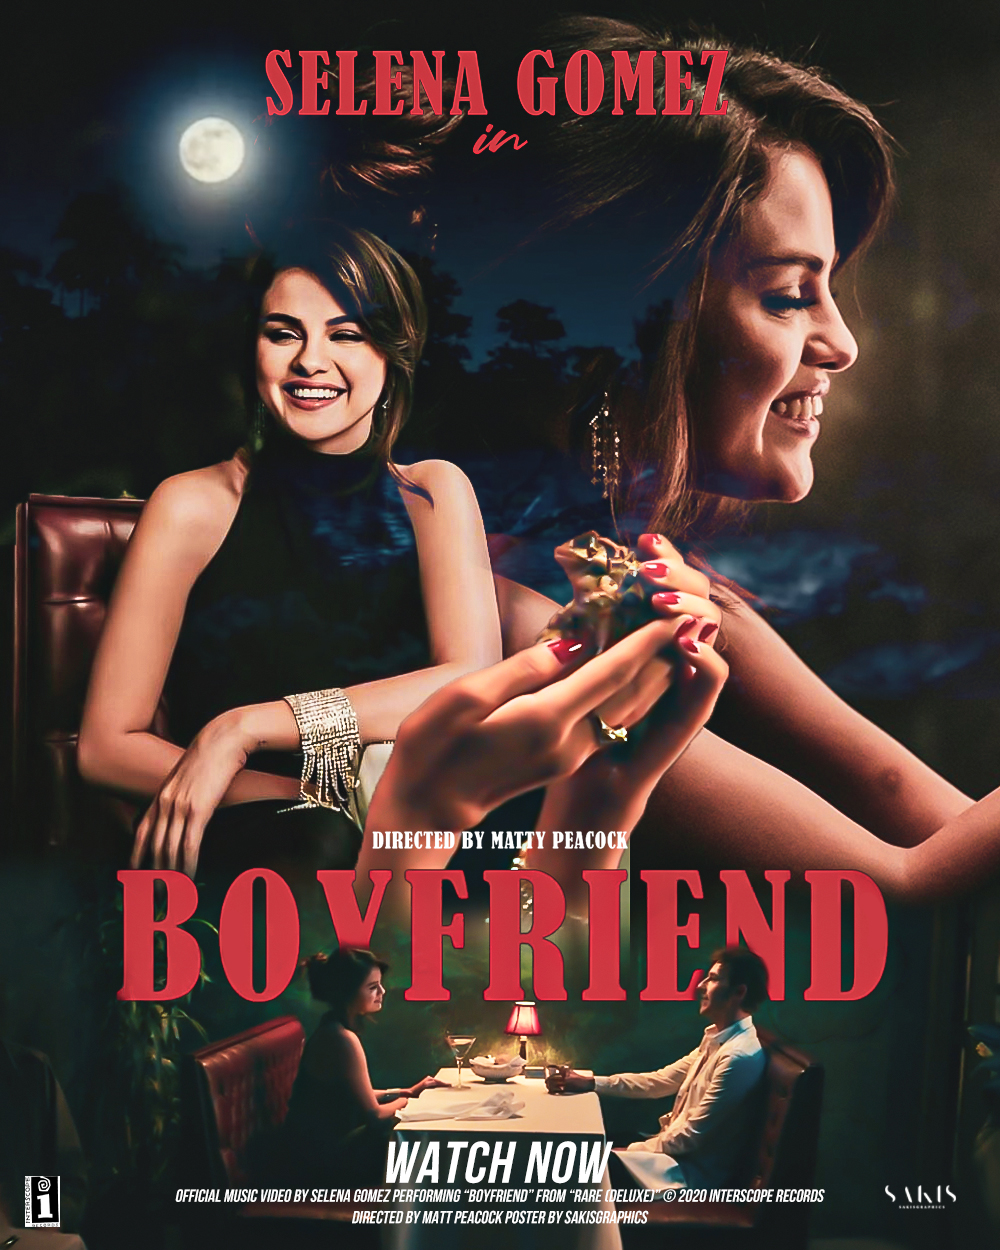 Selena Gomez Boyfriend (poster) Sakisgraphics on DeviantArt